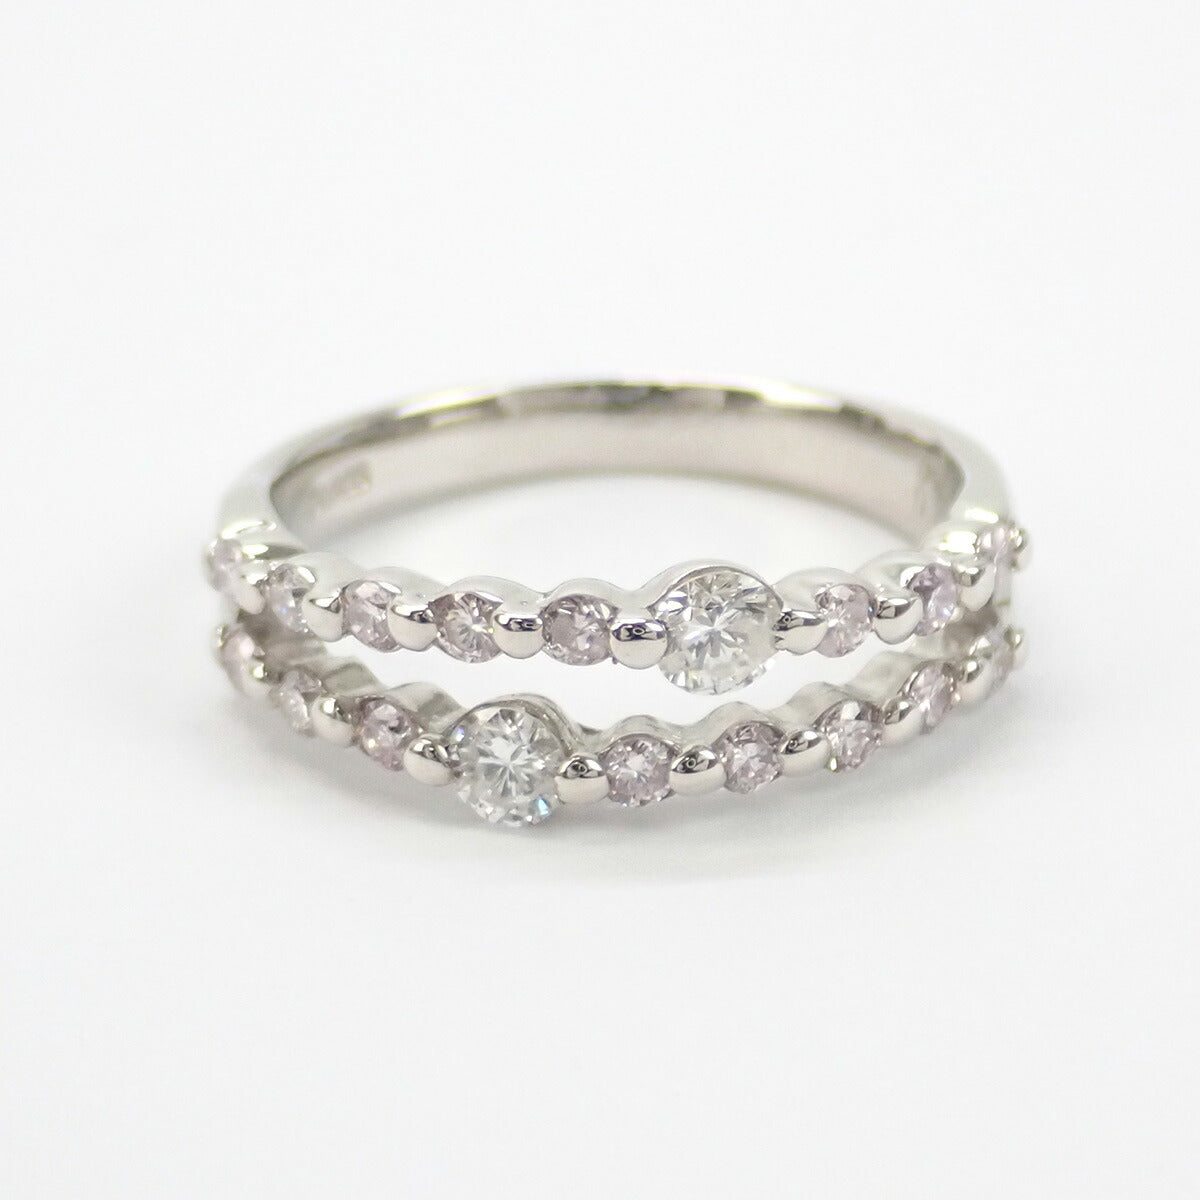 Platinum 900 Diamond Ring, Diamonds 0.36/0.20ct, Size 11, Silver Finish, Ladies (Pre-owned)